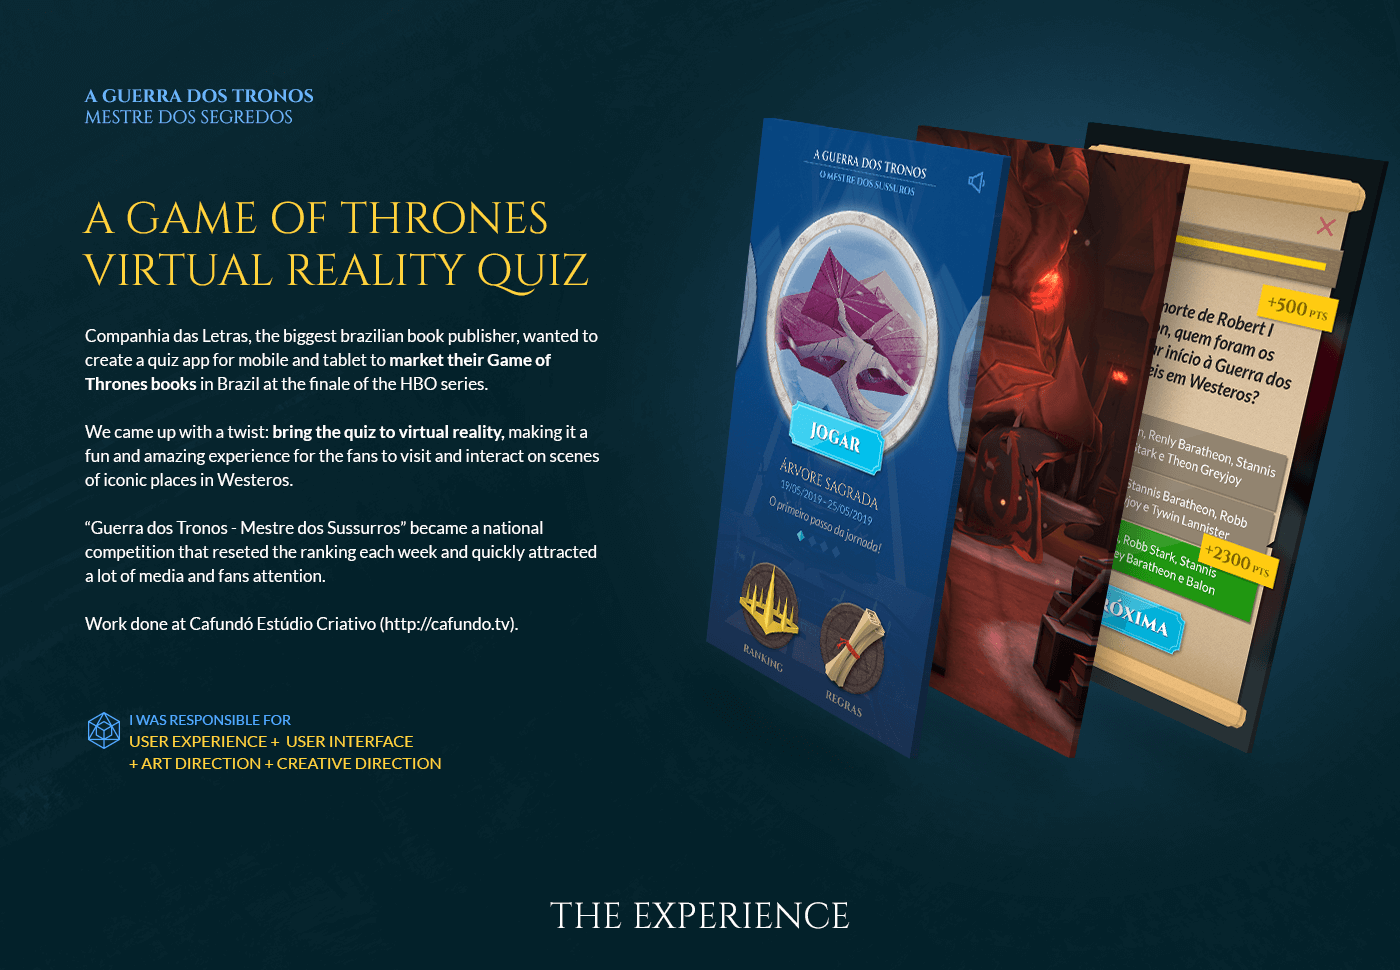 Game of Thrones got hbo book Quiz game dragon publisher nerdcast fantasy